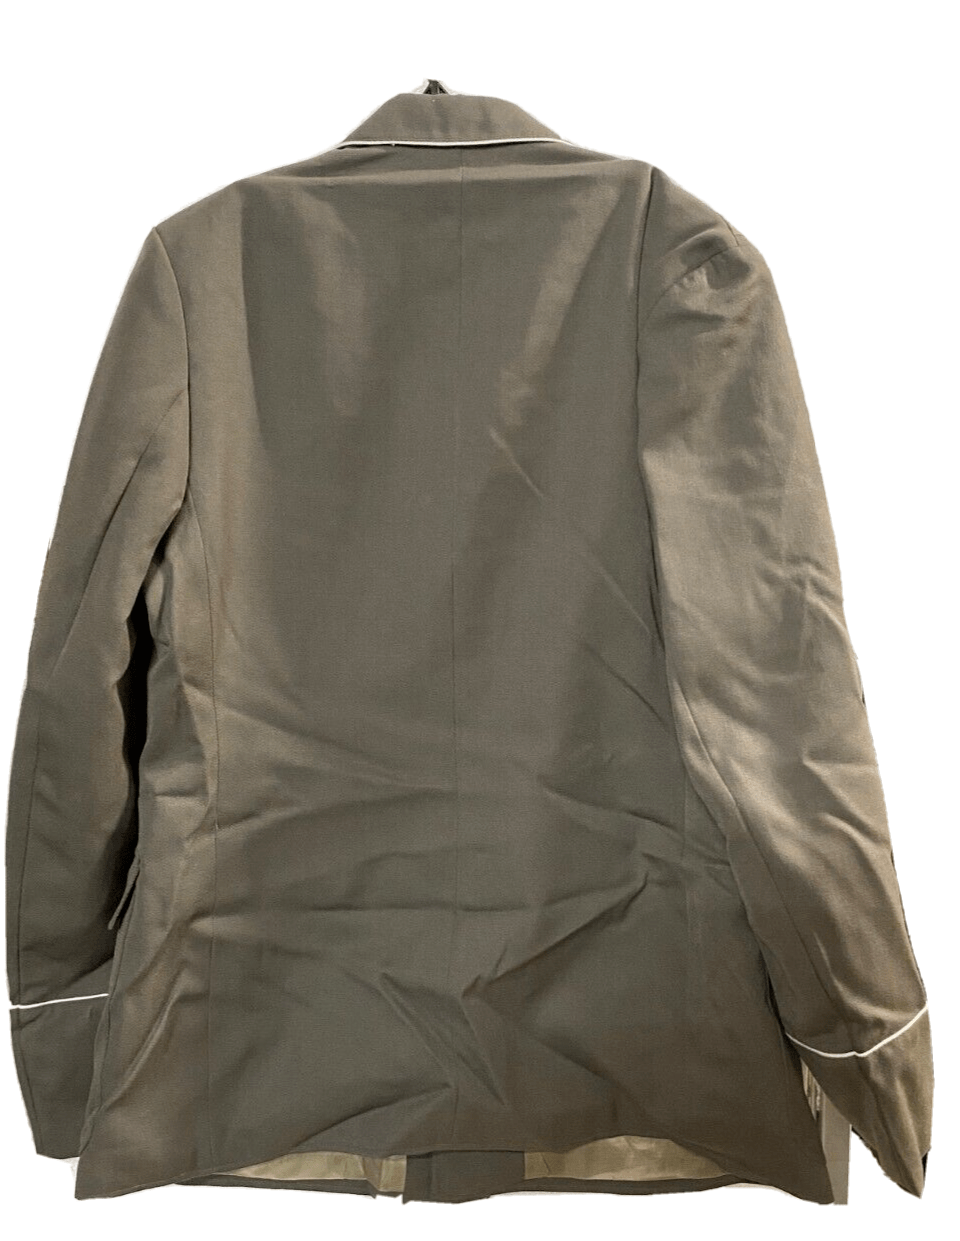 East German Dress Jacket